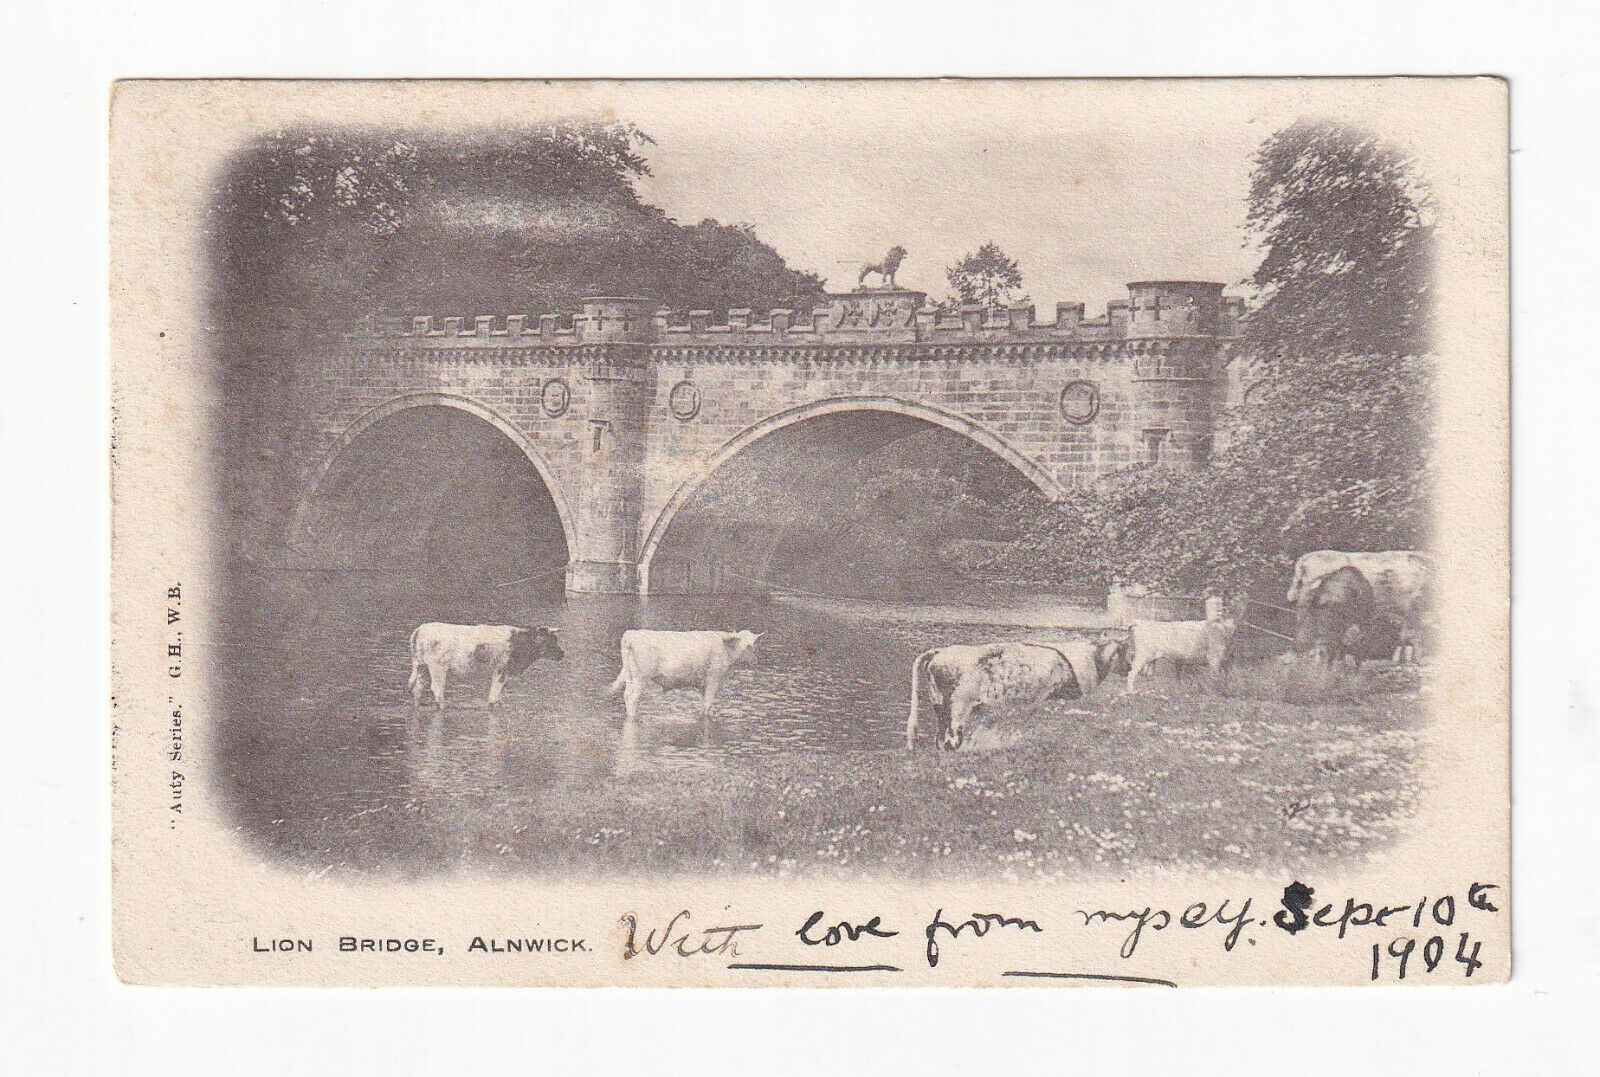 House Clearance - Printed Service Lion Bridge, Alnwick